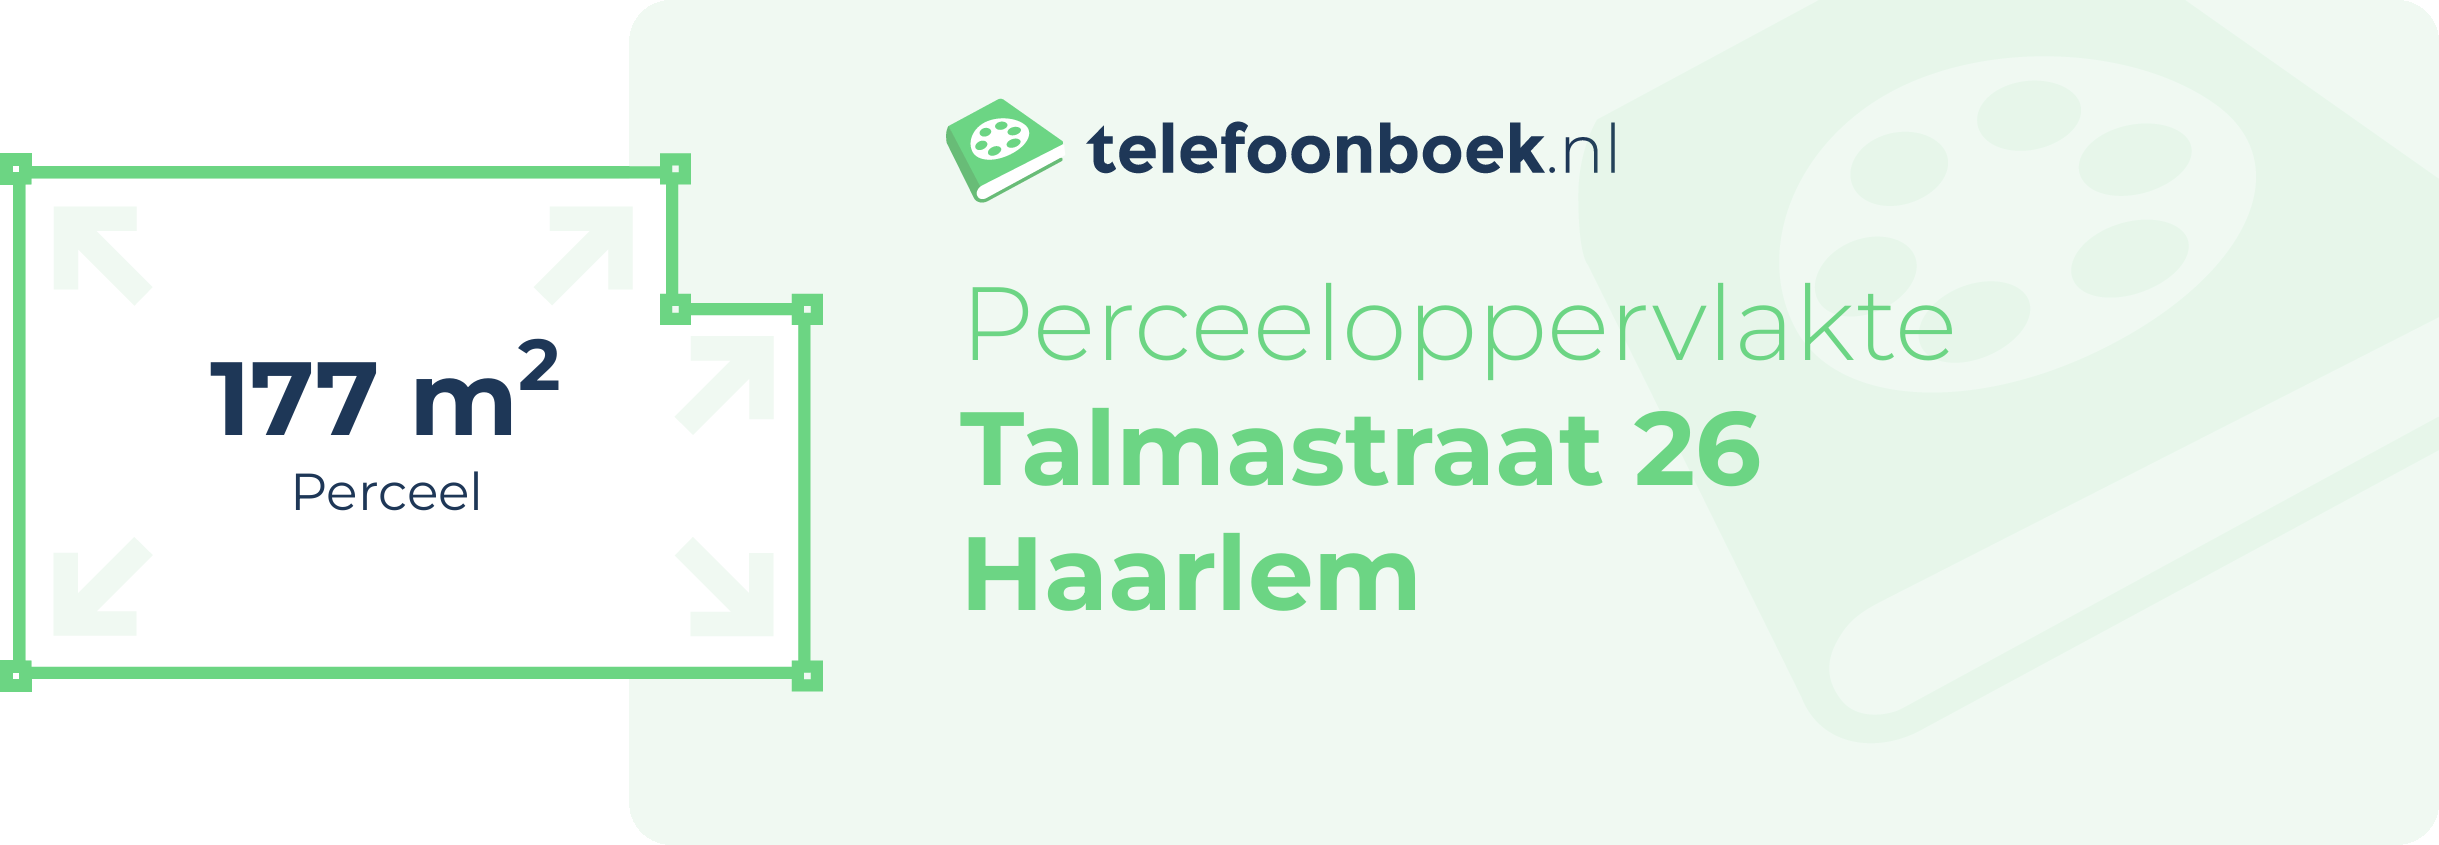 Perceeloppervlakte Talmastraat 26 Haarlem